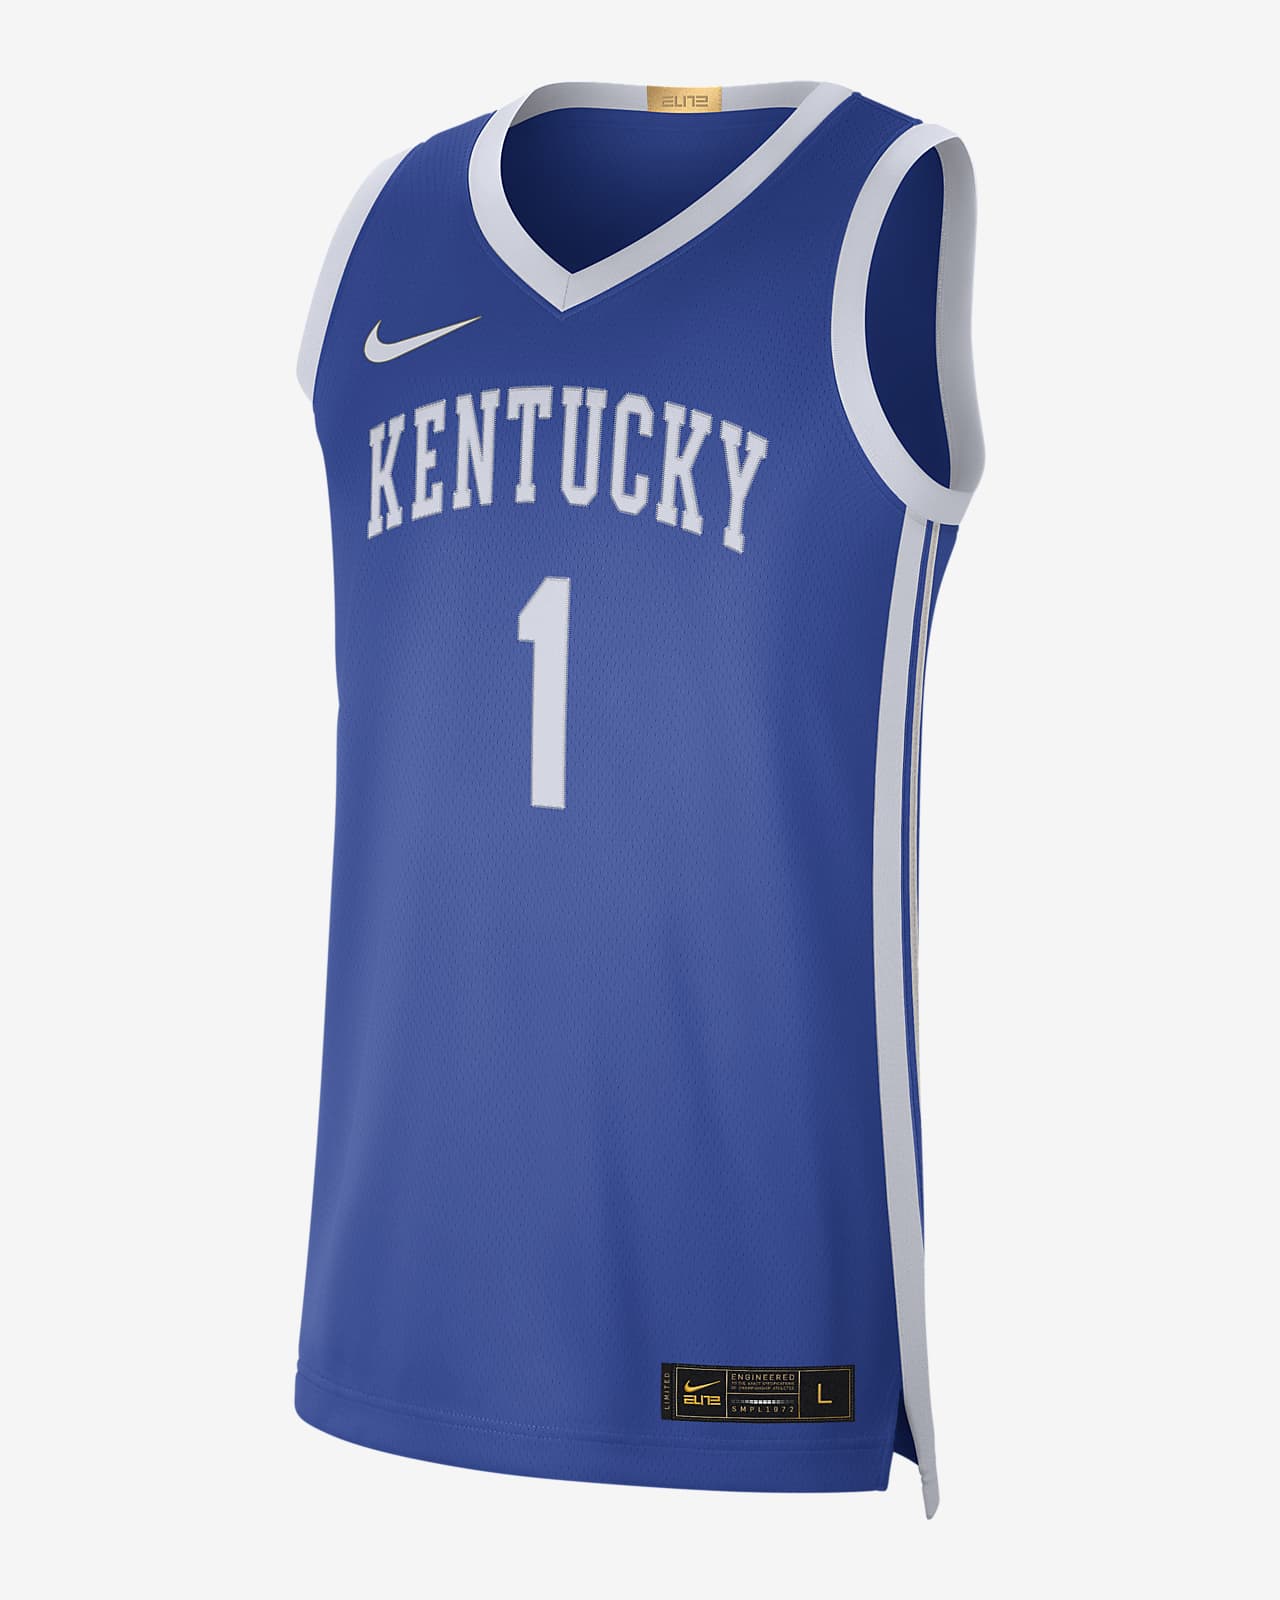 Jersey de básquetbol Nike Dri-FIT College para hombre Kentucky Limited